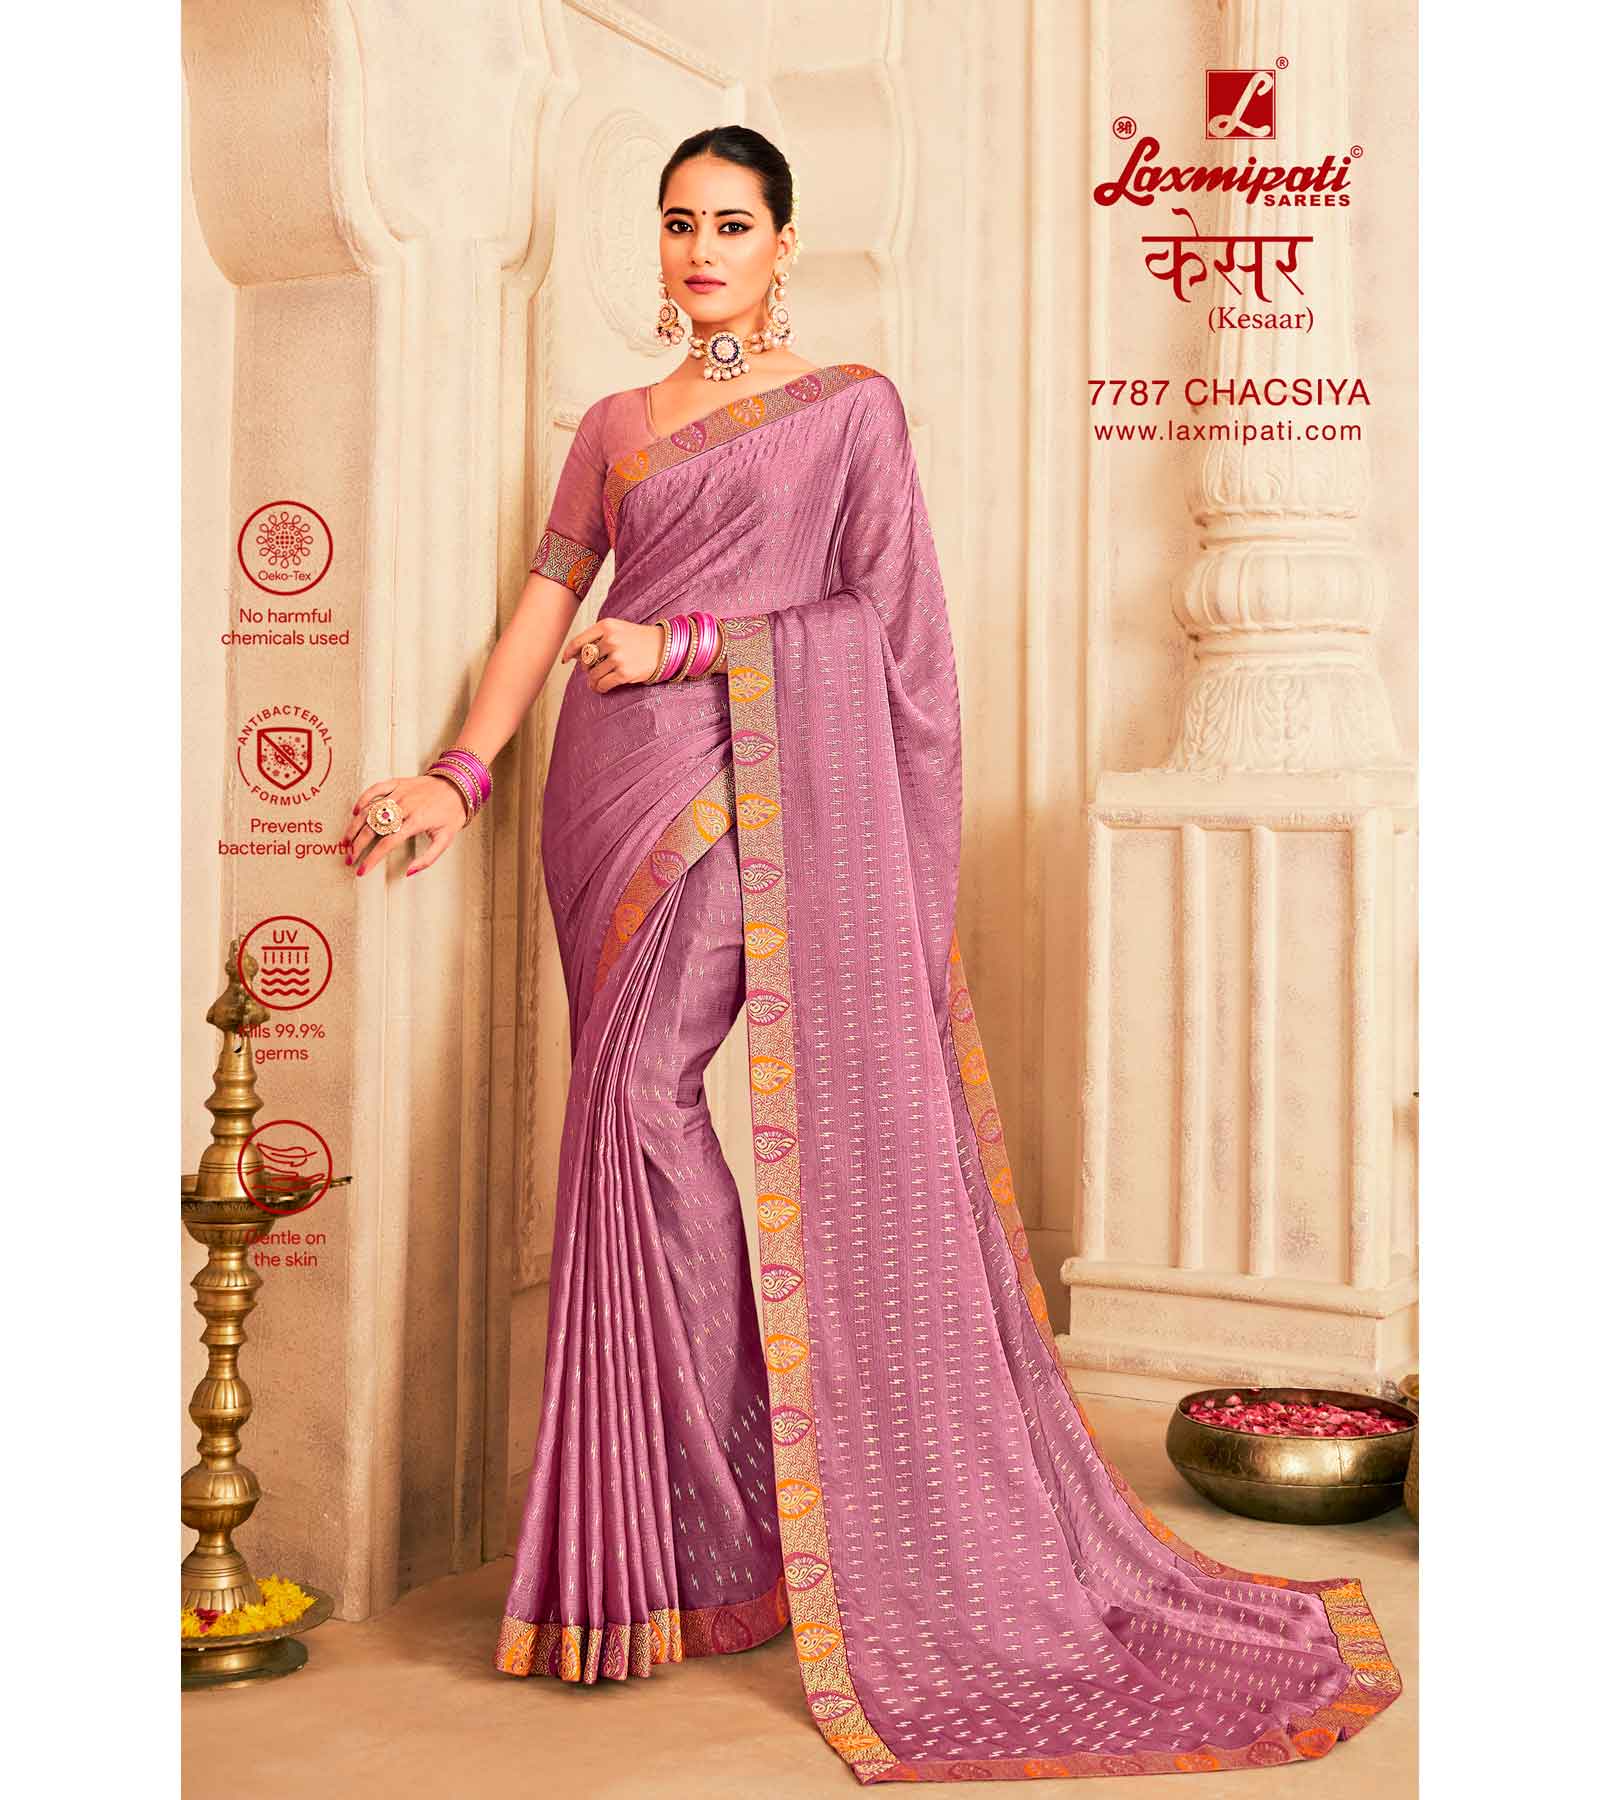 Red Laxmipati Saree - Printed | Laxmipati 6080 Malappuram Kerala Online  Shopping | Party wear sarees, Saree designs, Trendy sarees